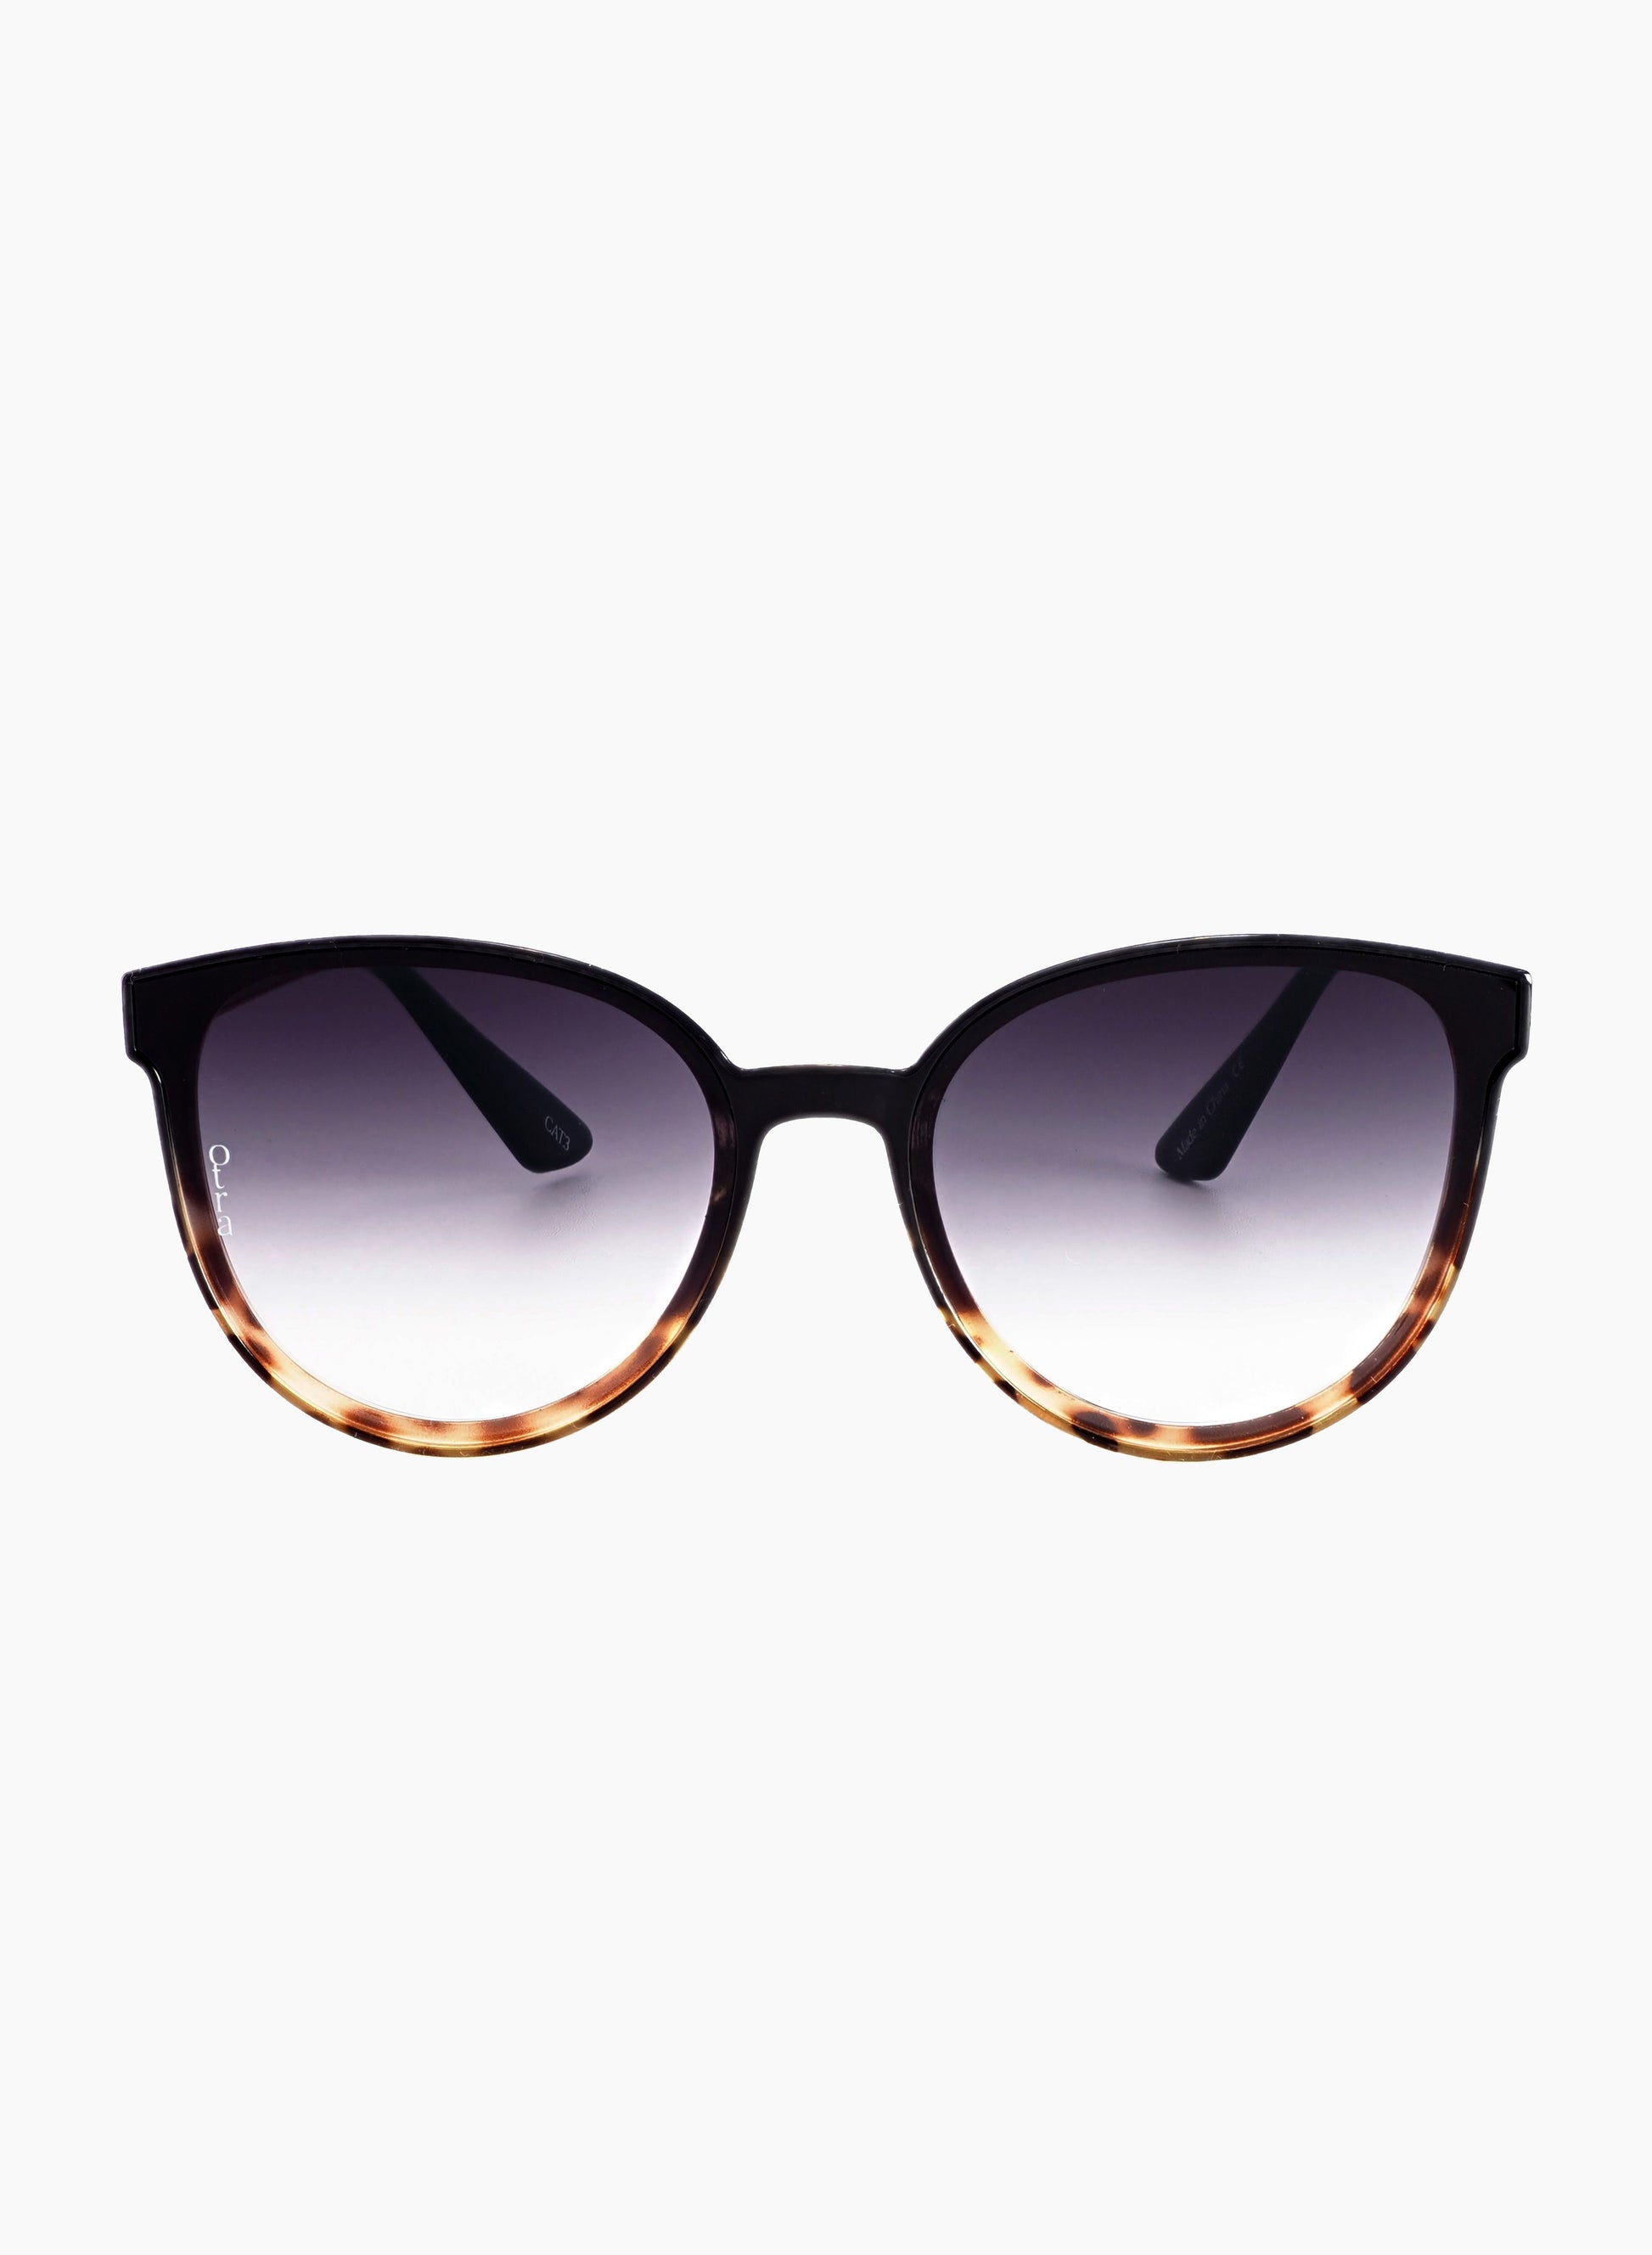 Oversized Dali sunglasses in tortoiseshell